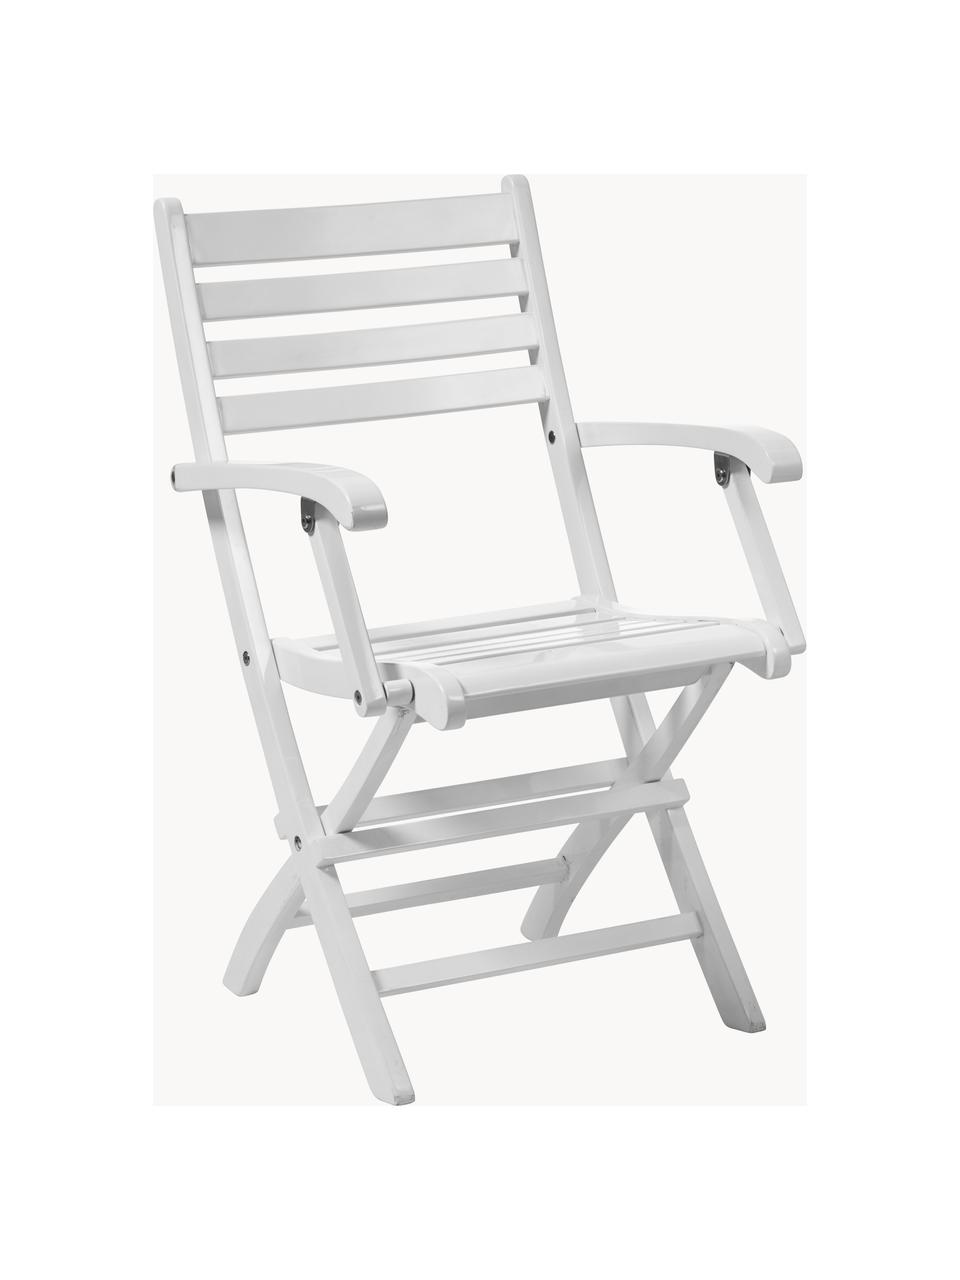 Skládací zahradní židle York, Mahagonové dřevo
Certifikace V-Legal, Bílá, Š 52 cm, H 53 cm